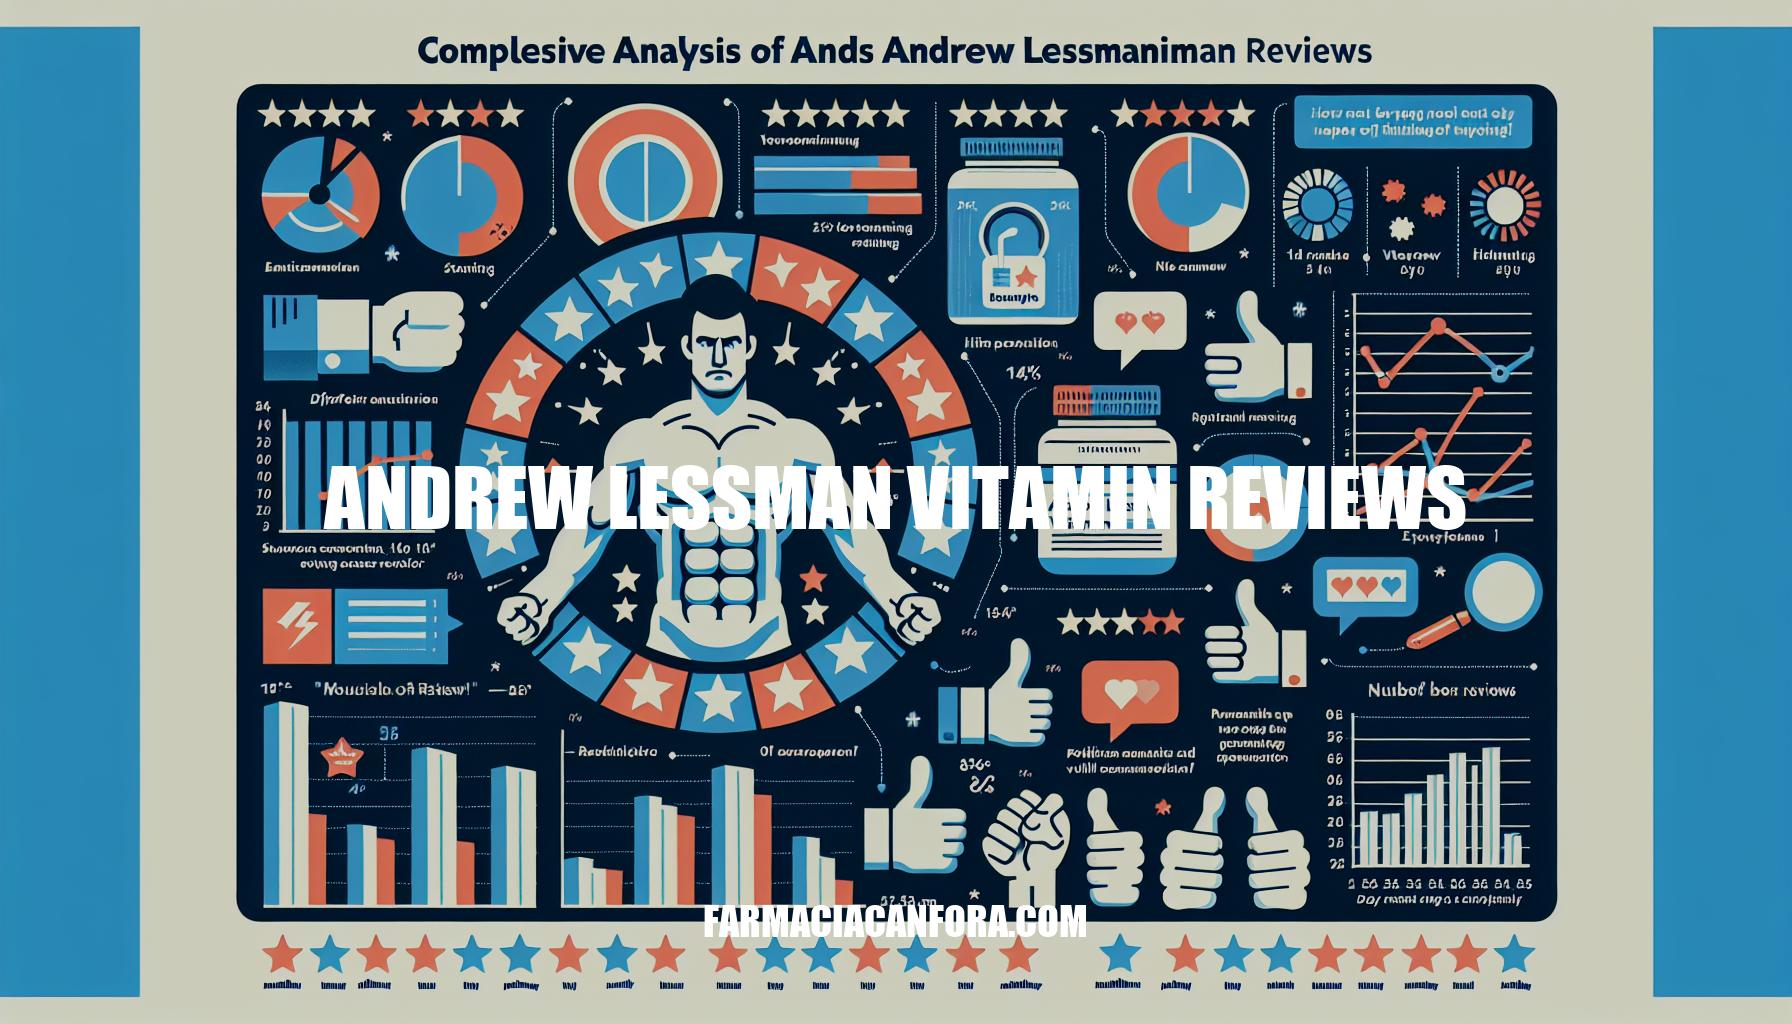 Andrew Lessman Vitamin Reviews: A Comprehensive Analysis